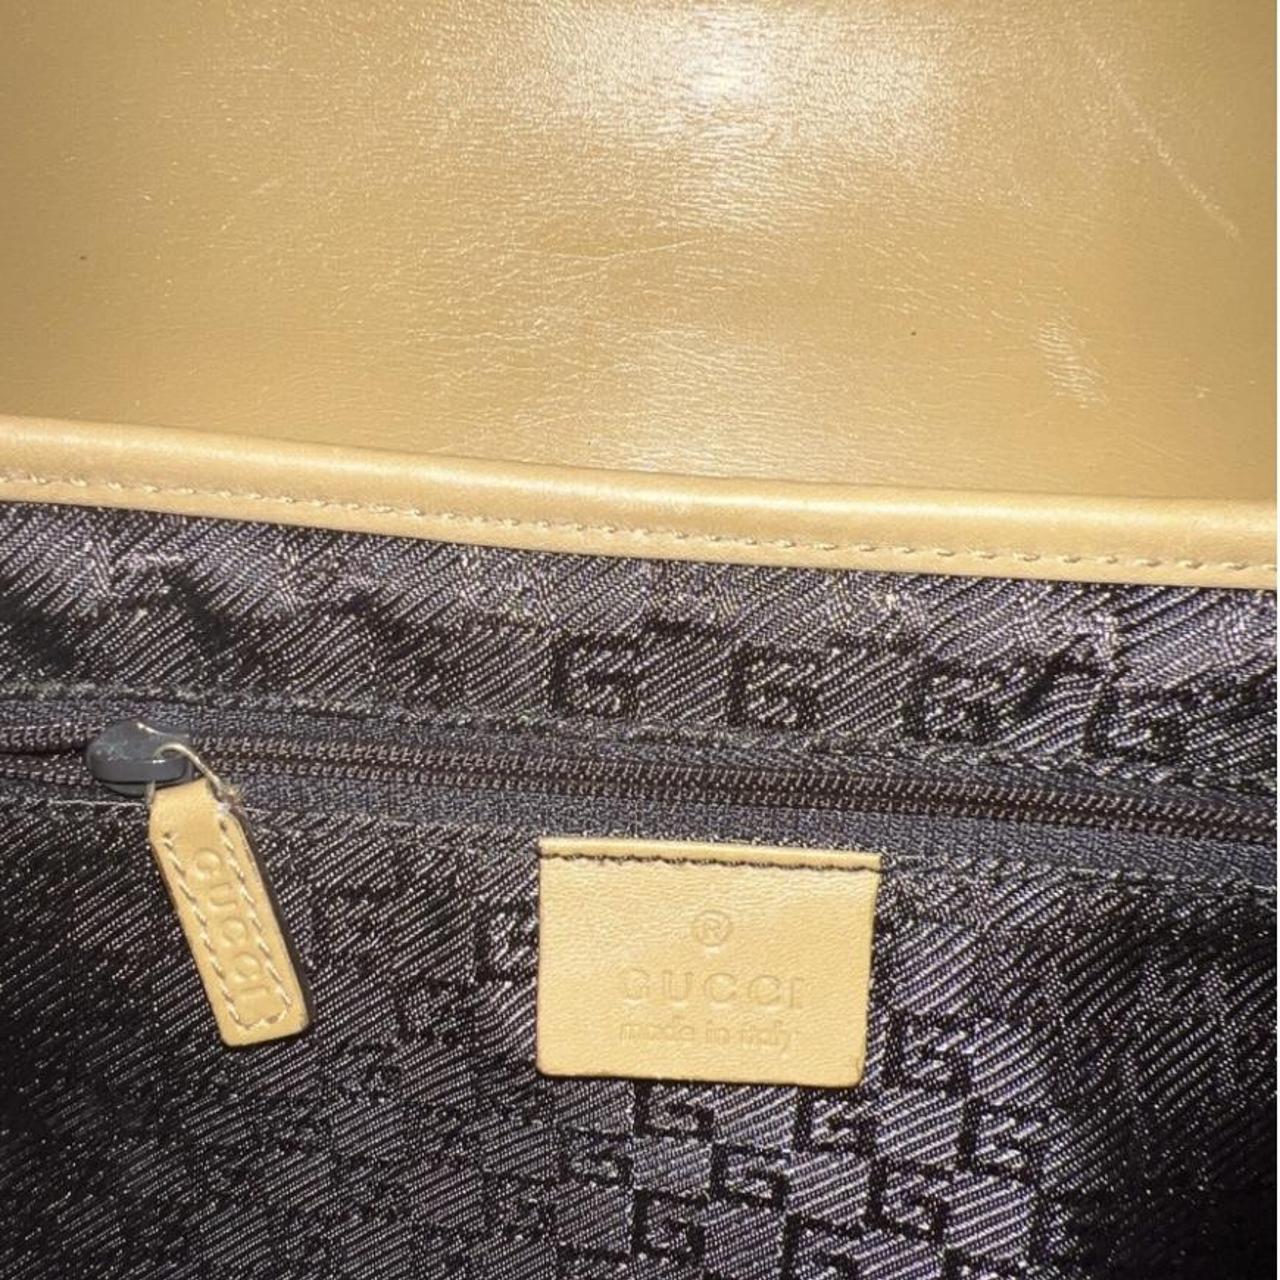 Gucci Women's Tan and Brown Bag (3)